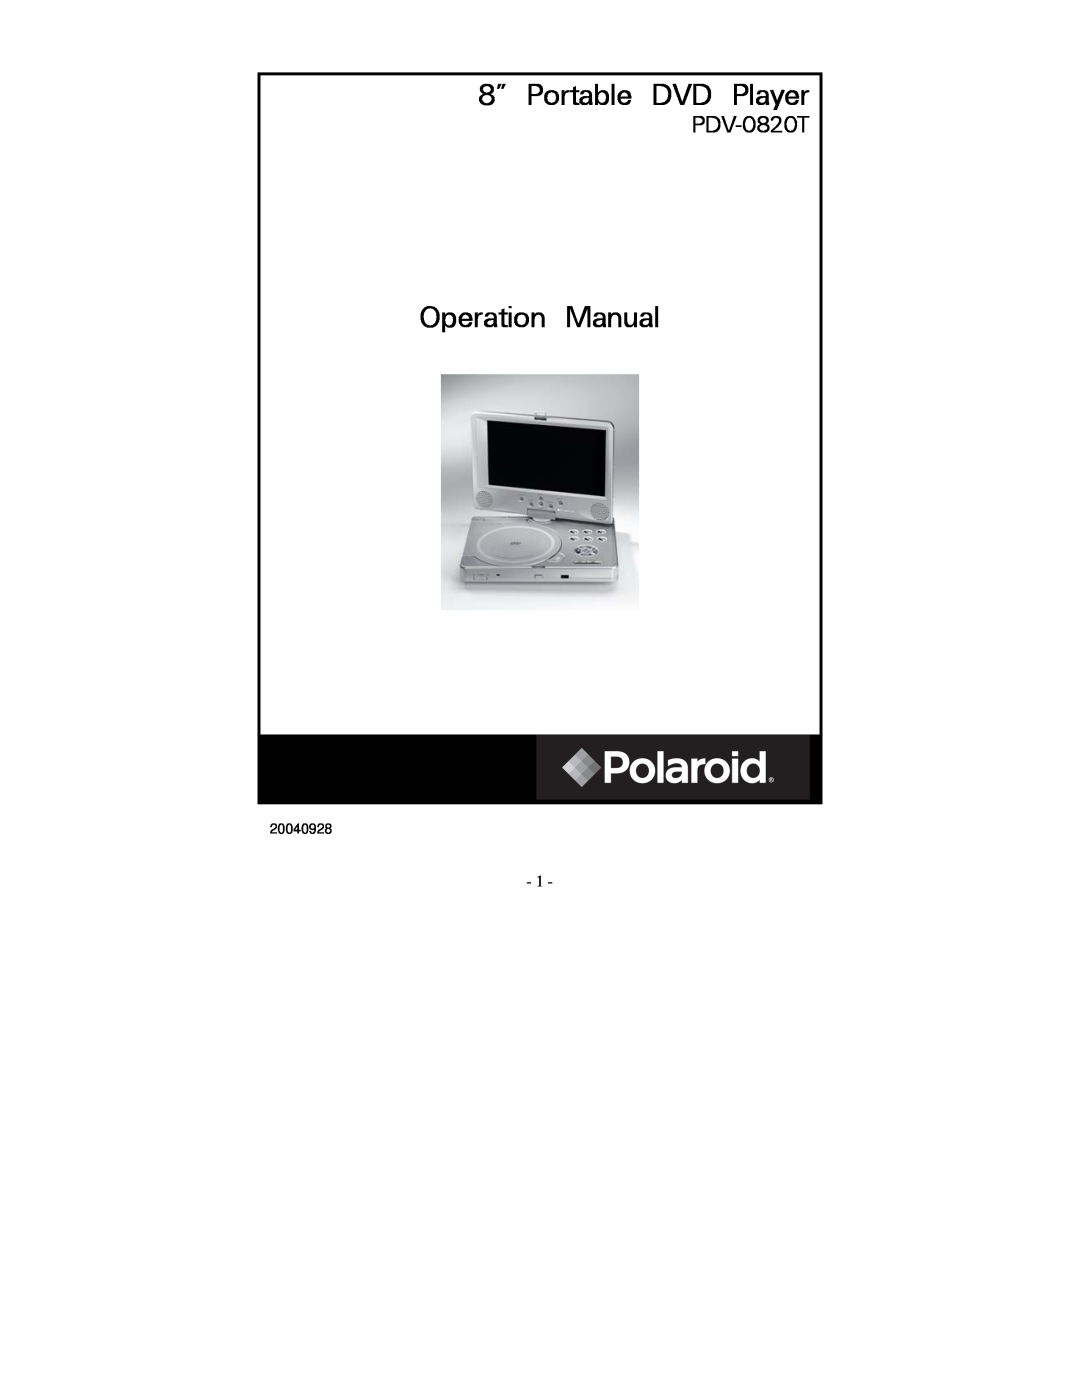 Polaroid PDV-0820T operation manual 8” Portable DVD Player 